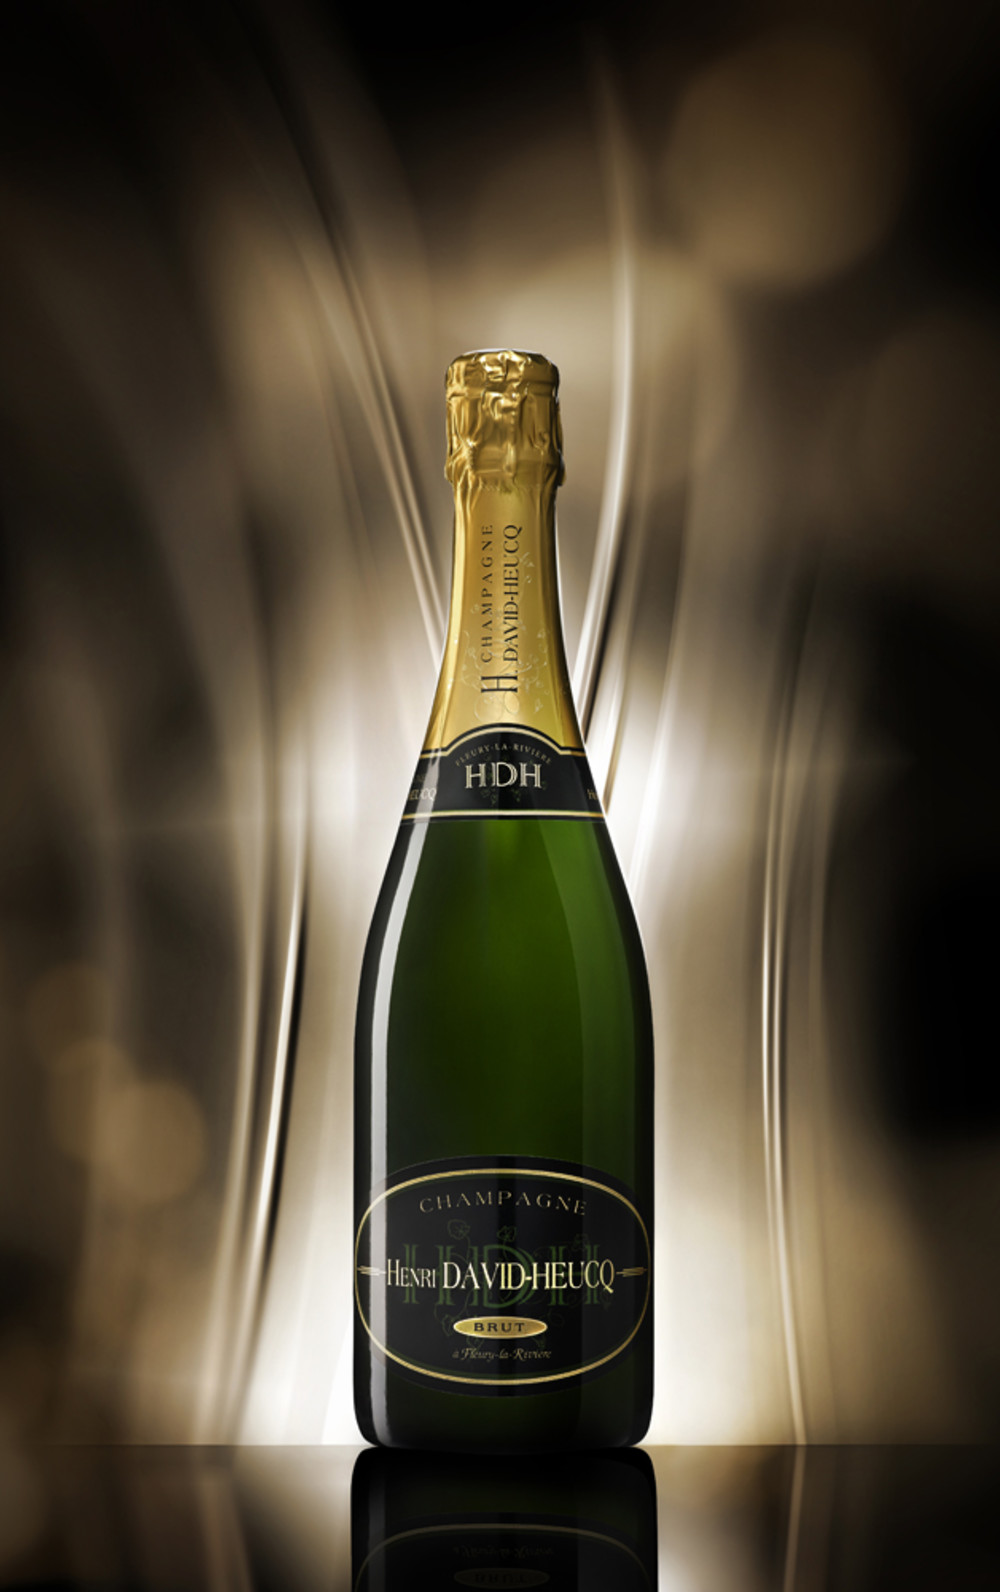 Champagne Henri DAVID-HEUCQ_Brut.jpg